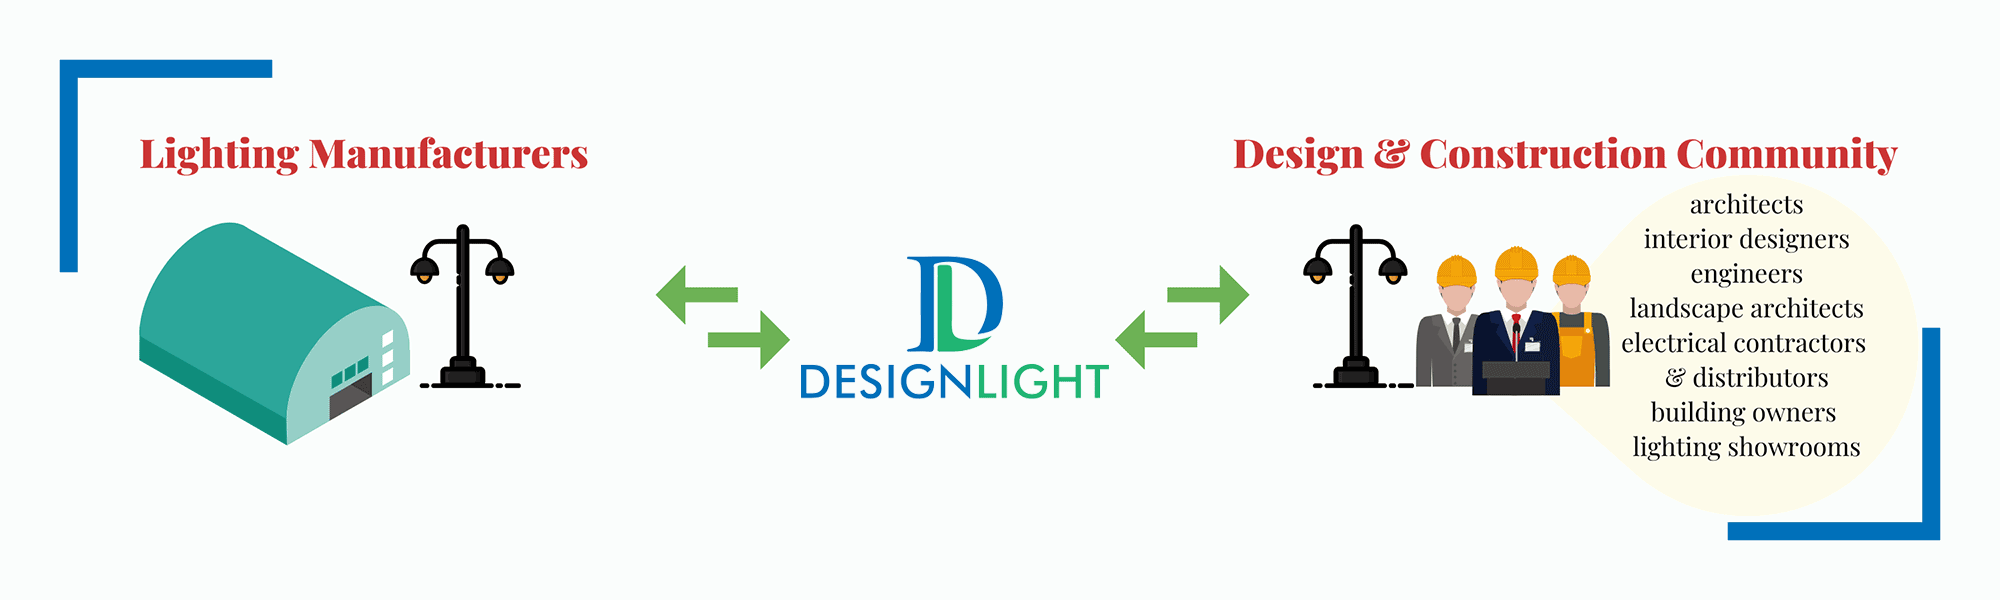 Designlight Homepage Infographic